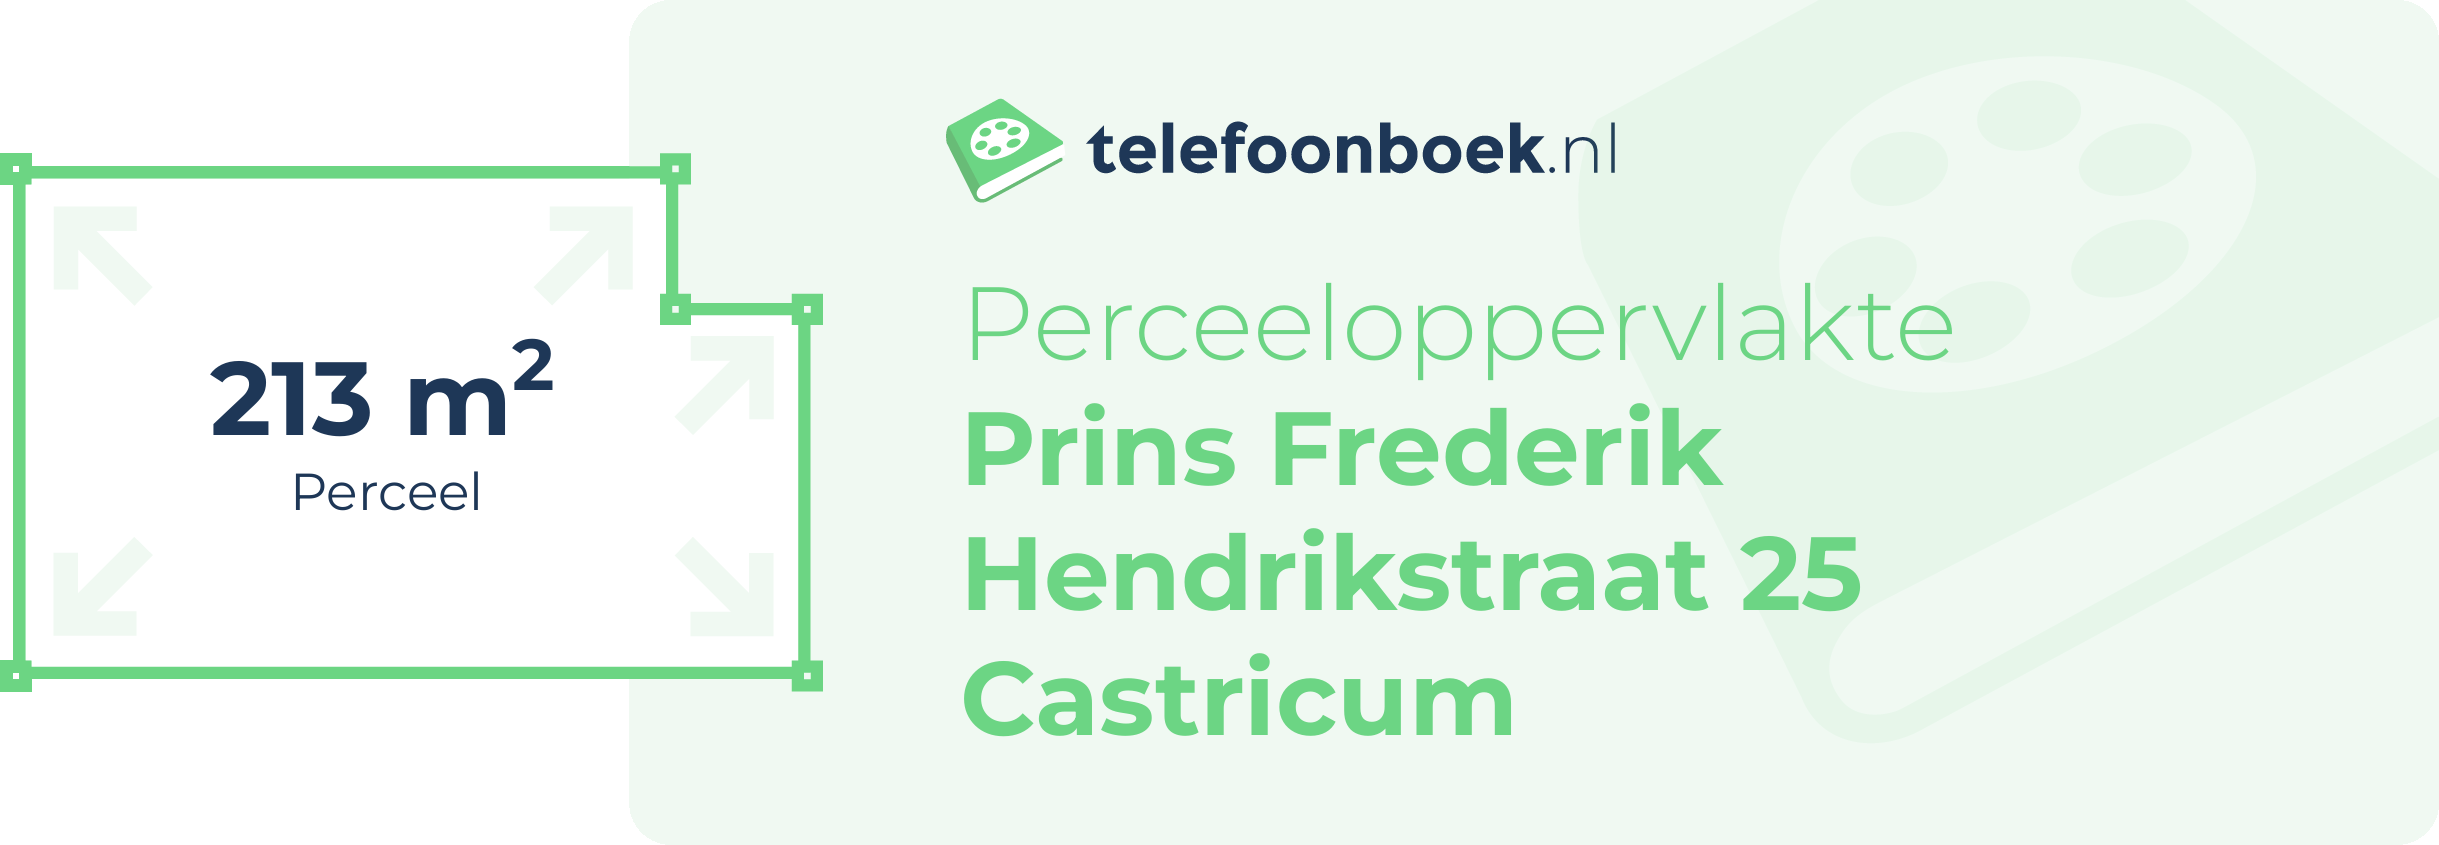 Perceeloppervlakte Prins Frederik Hendrikstraat 25 Castricum